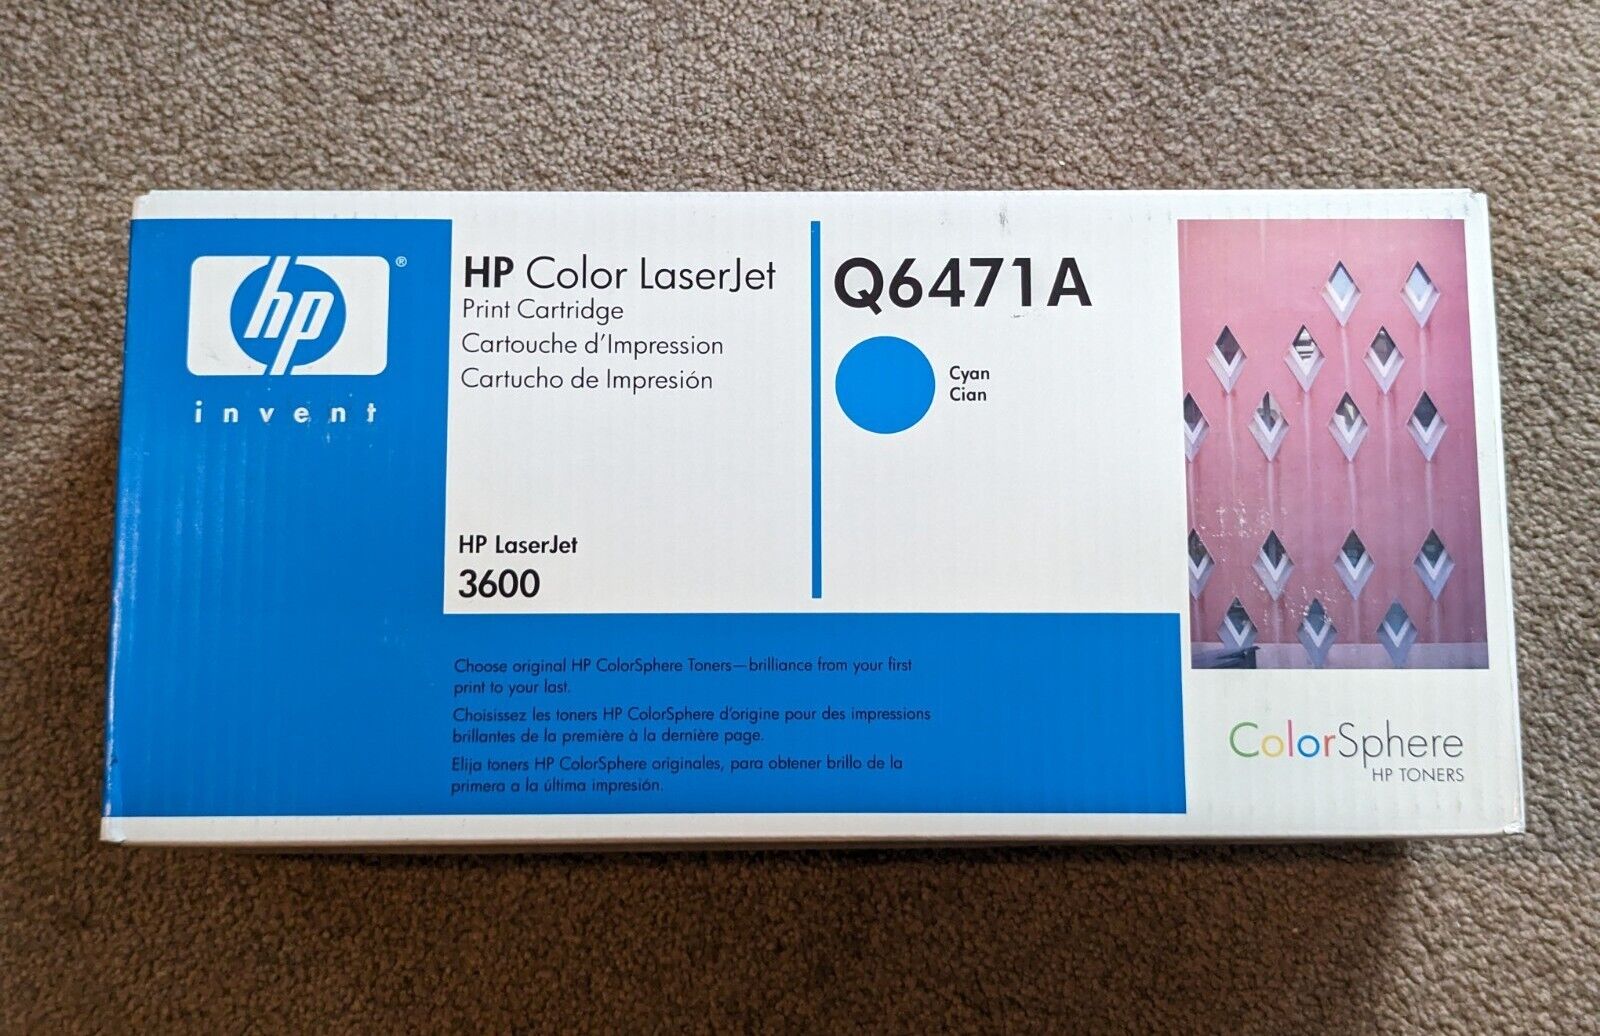 NEW Sealed Genuine HP Q6471A Cyan Print Cartridge 502A LaserJet 3600